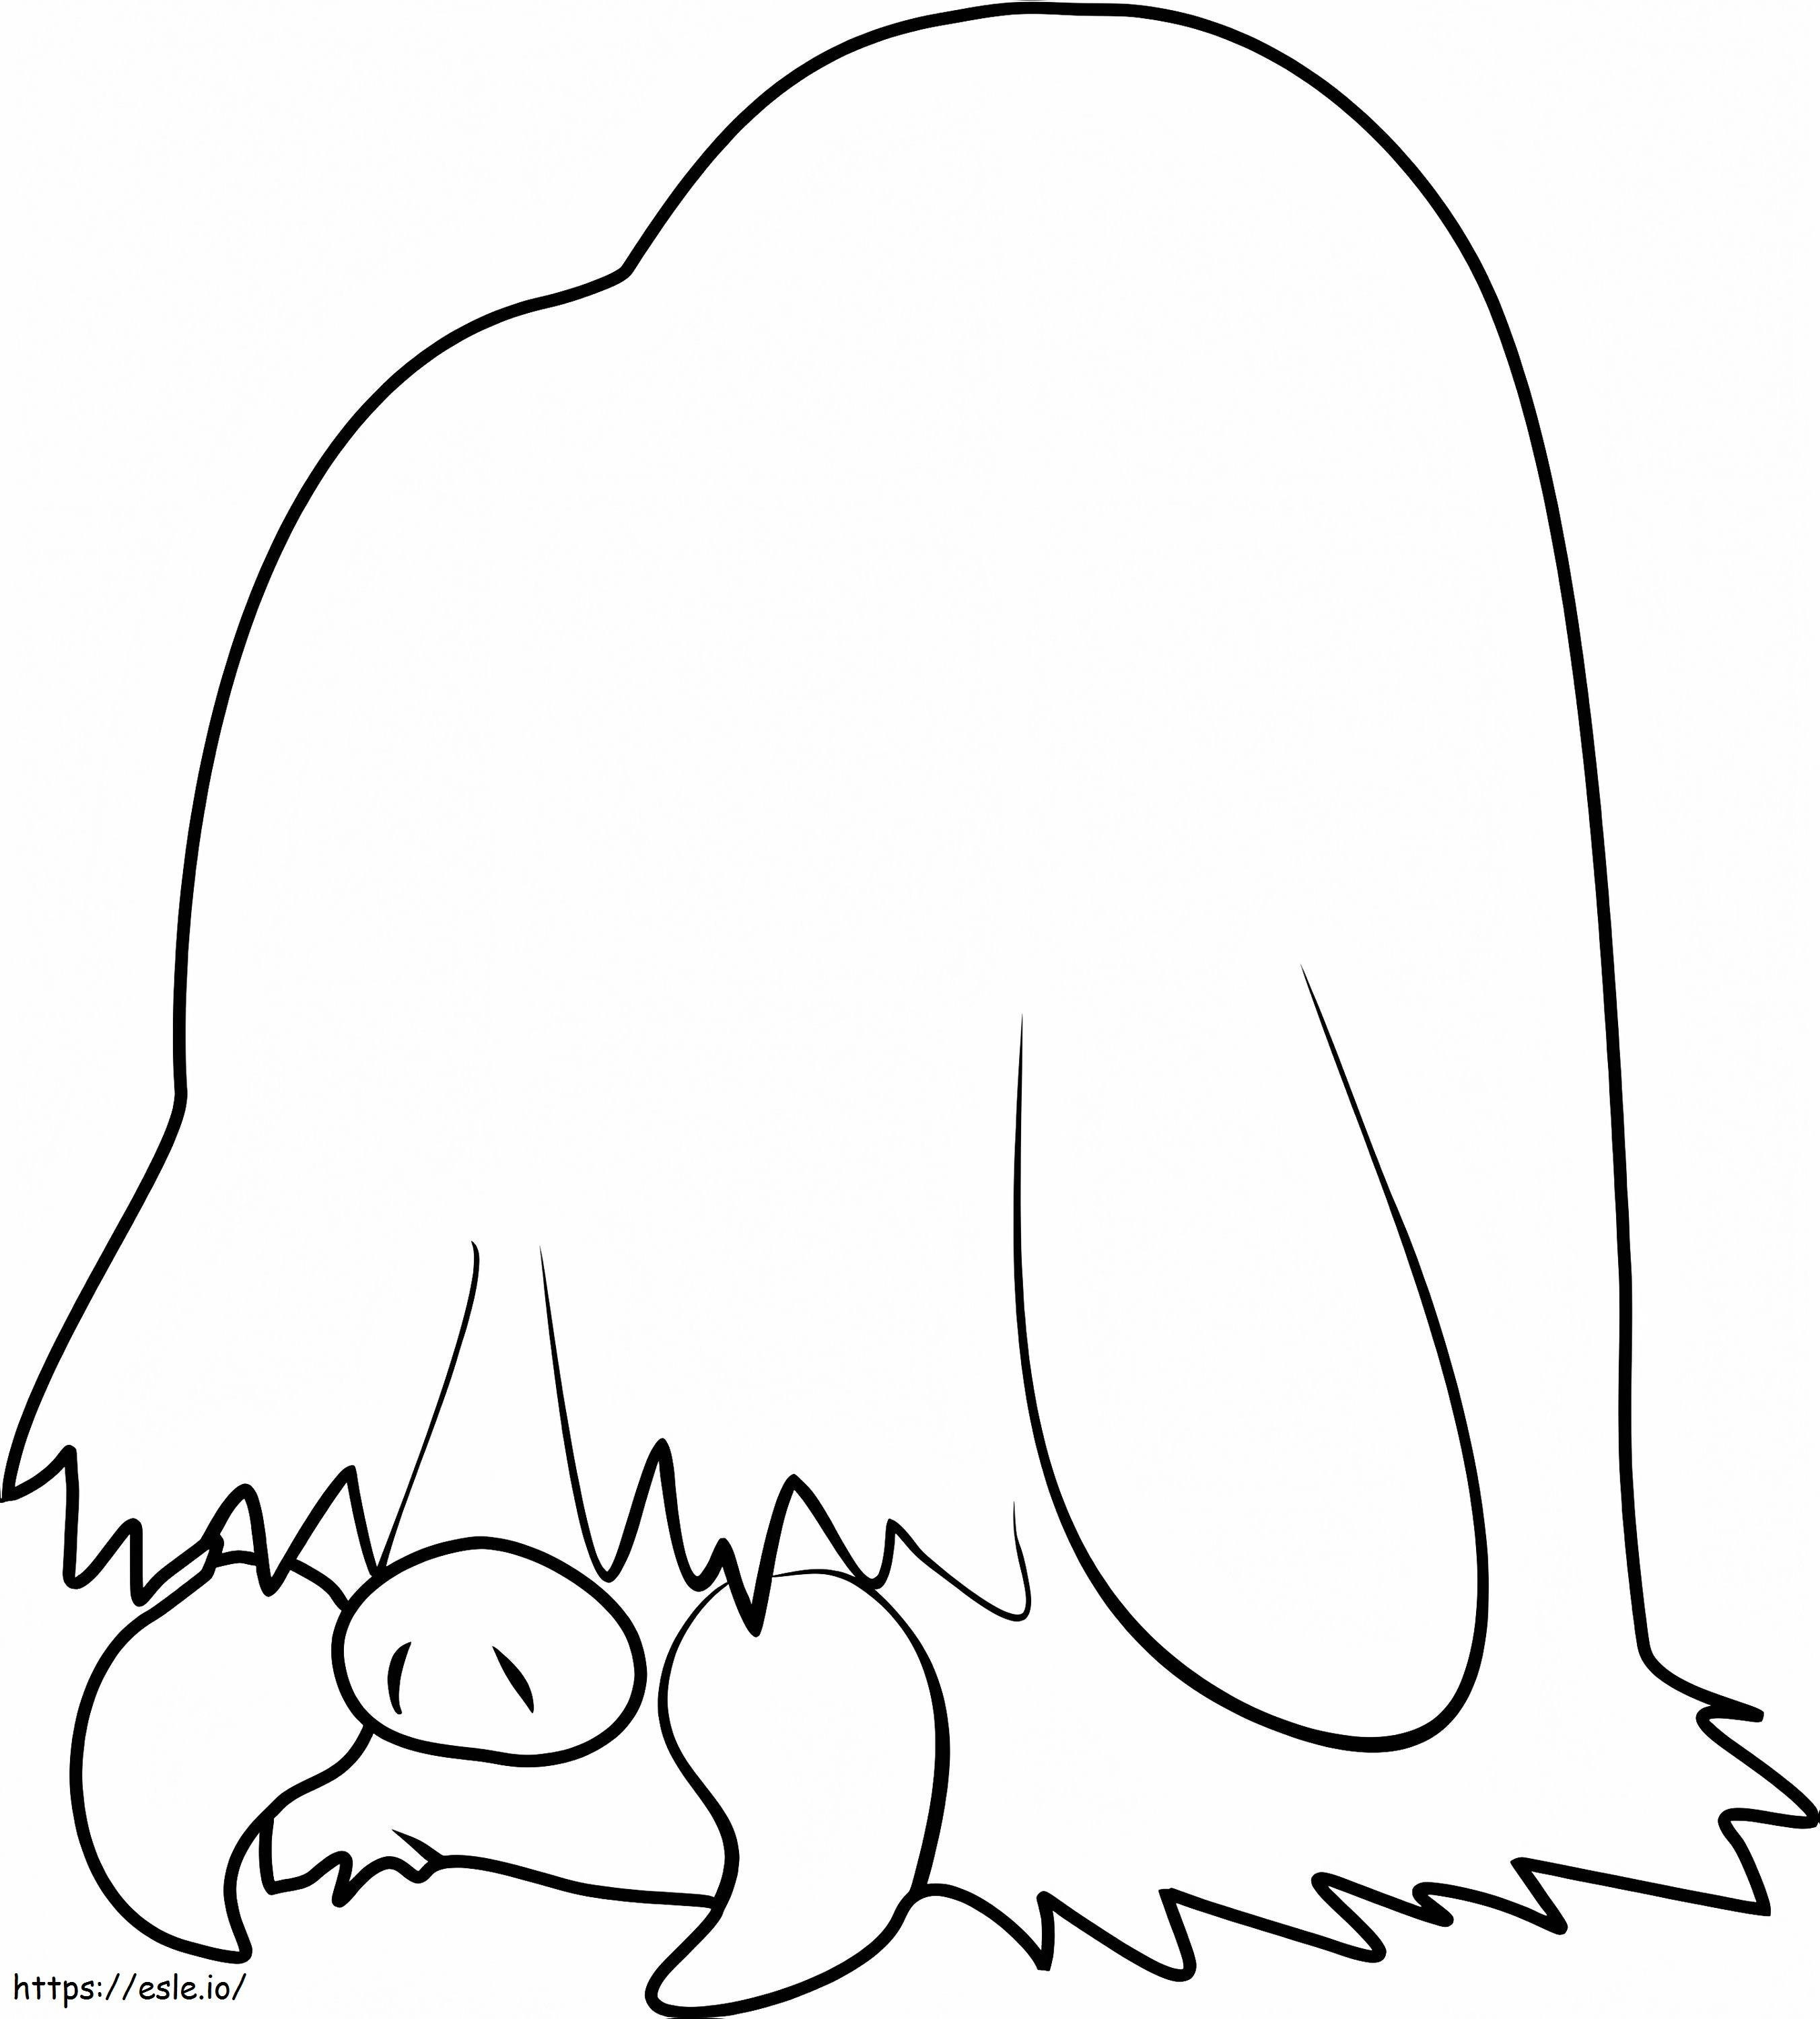 Coloriage Pokémon Piloswine Gen 2 à imprimer dessin